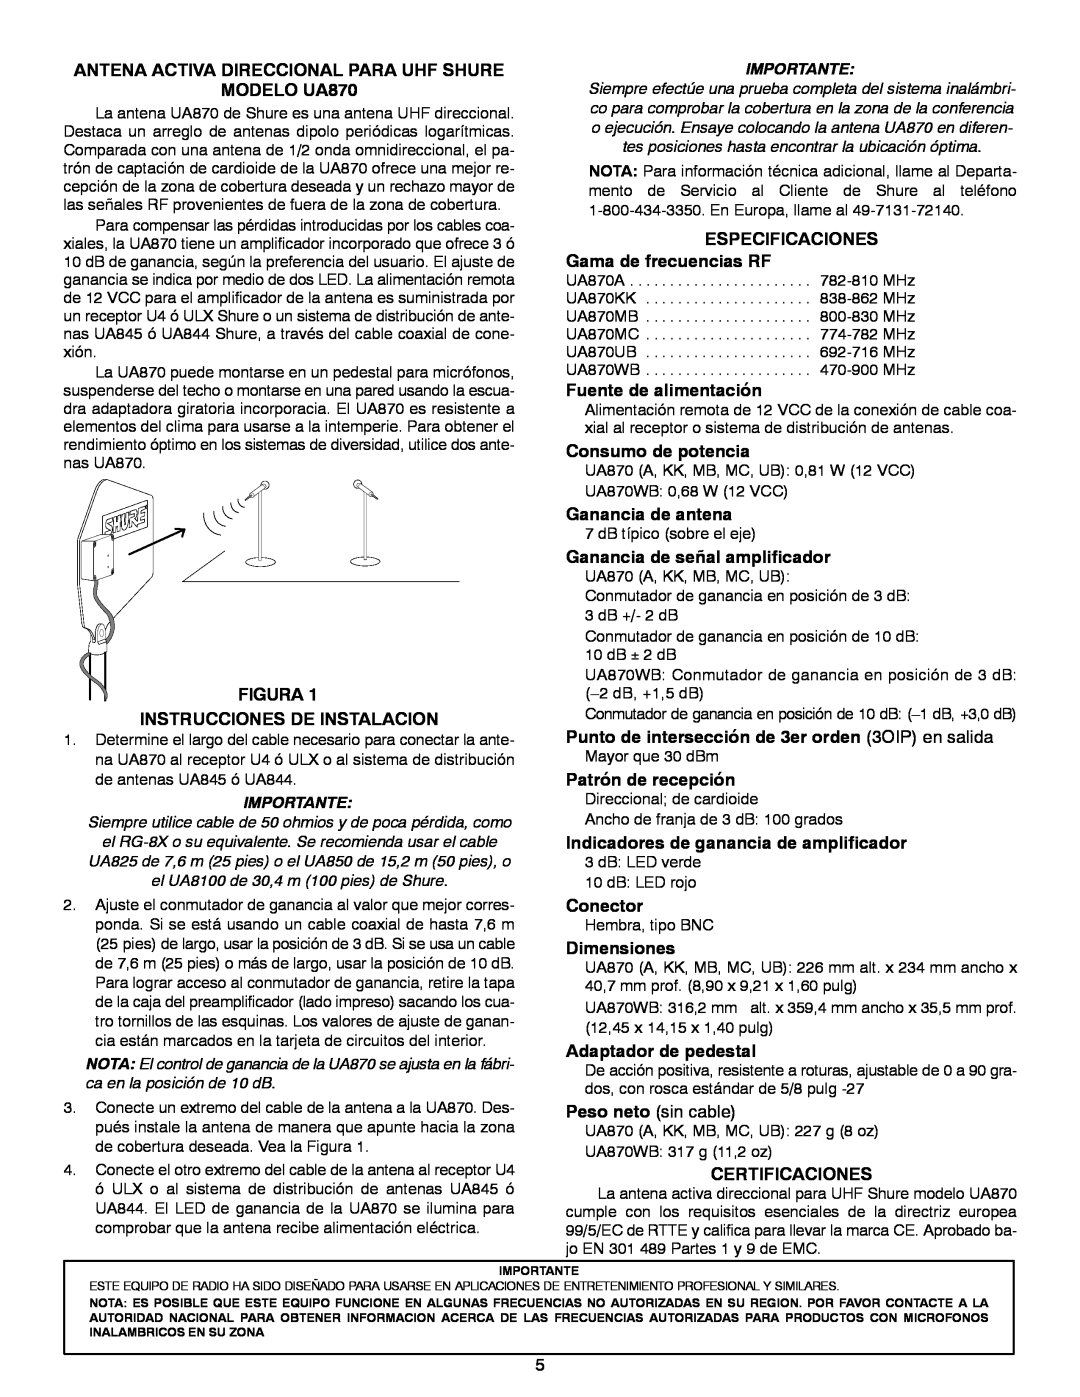 Shure UA870 installation instructions Antena Activa Direccional Para Uhf Shure 